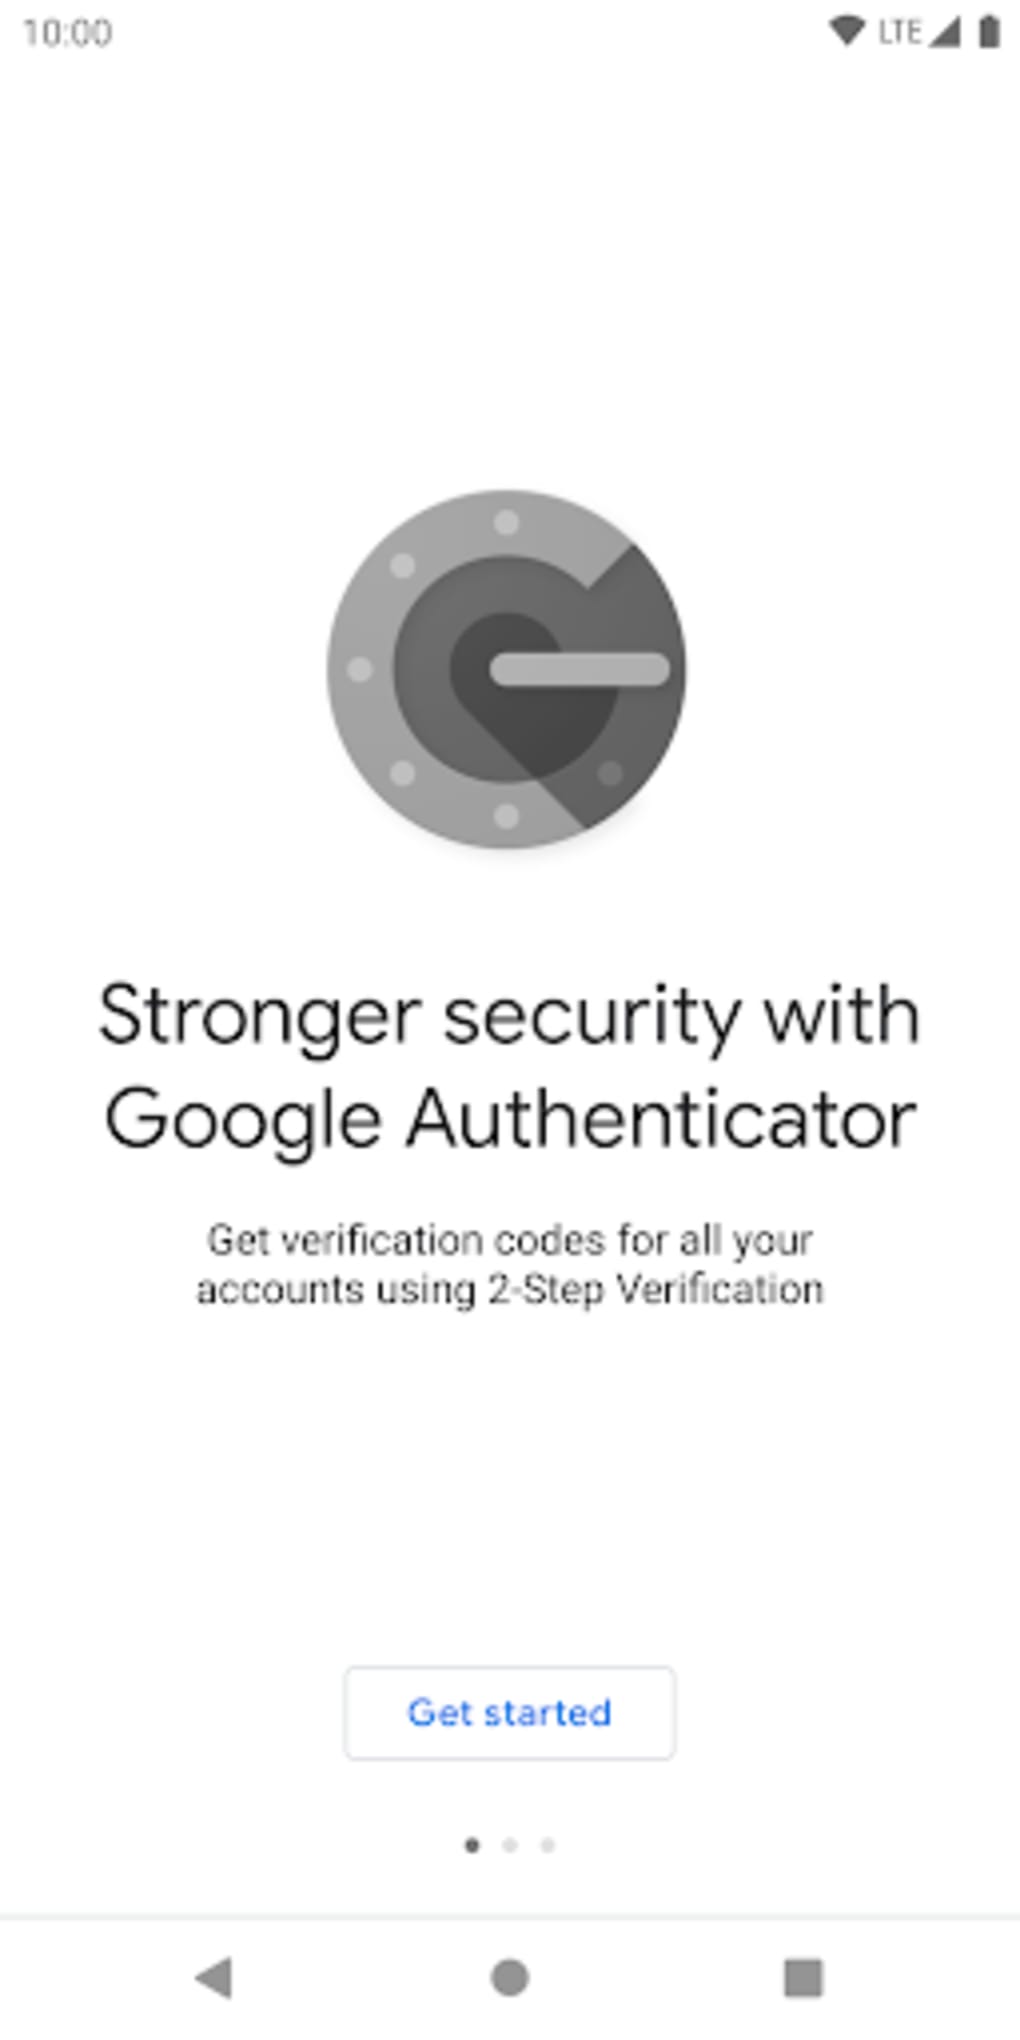 lost google authenticator